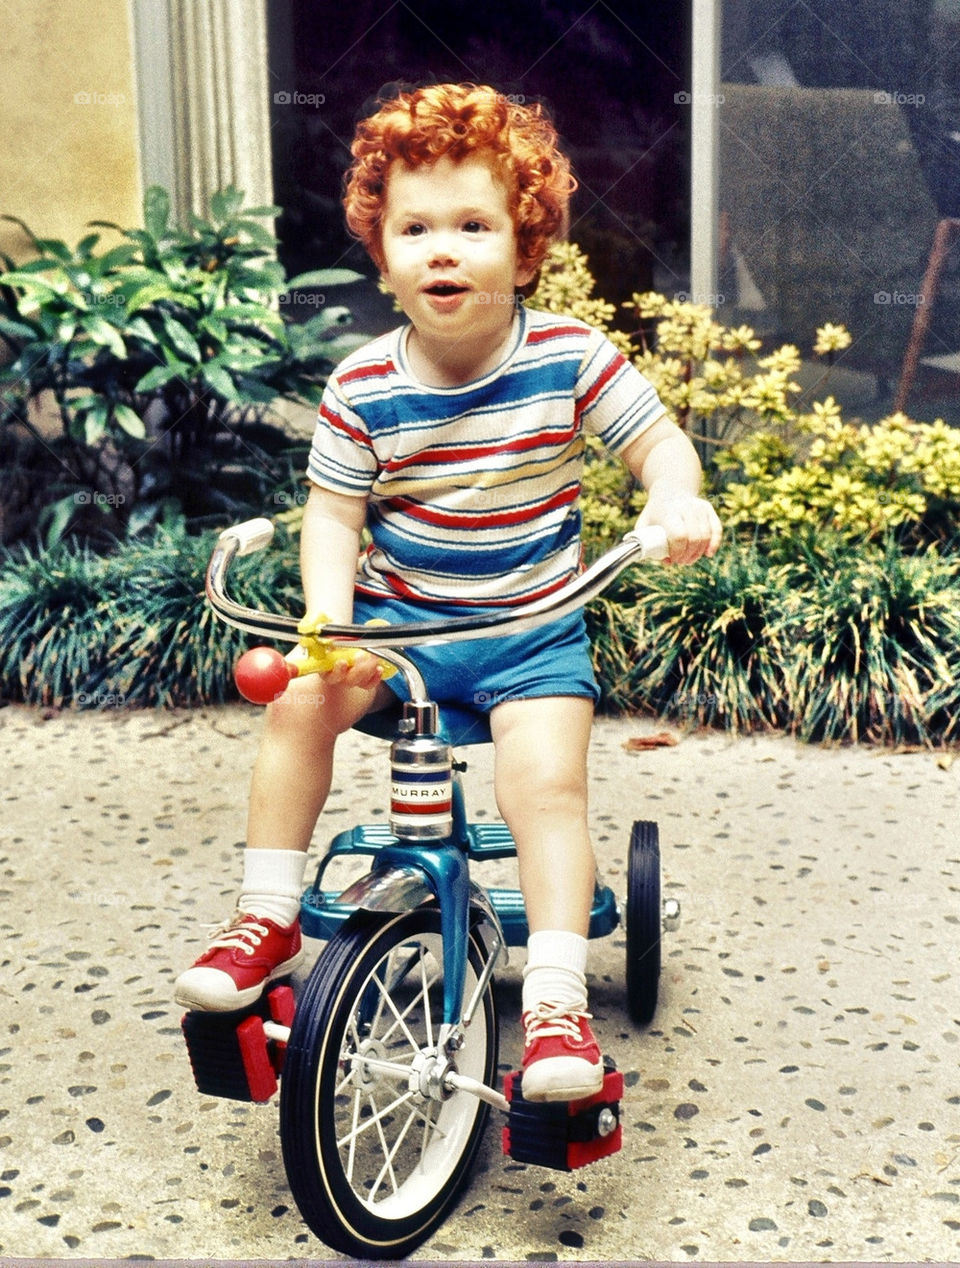 red bike boy cute by bluehair